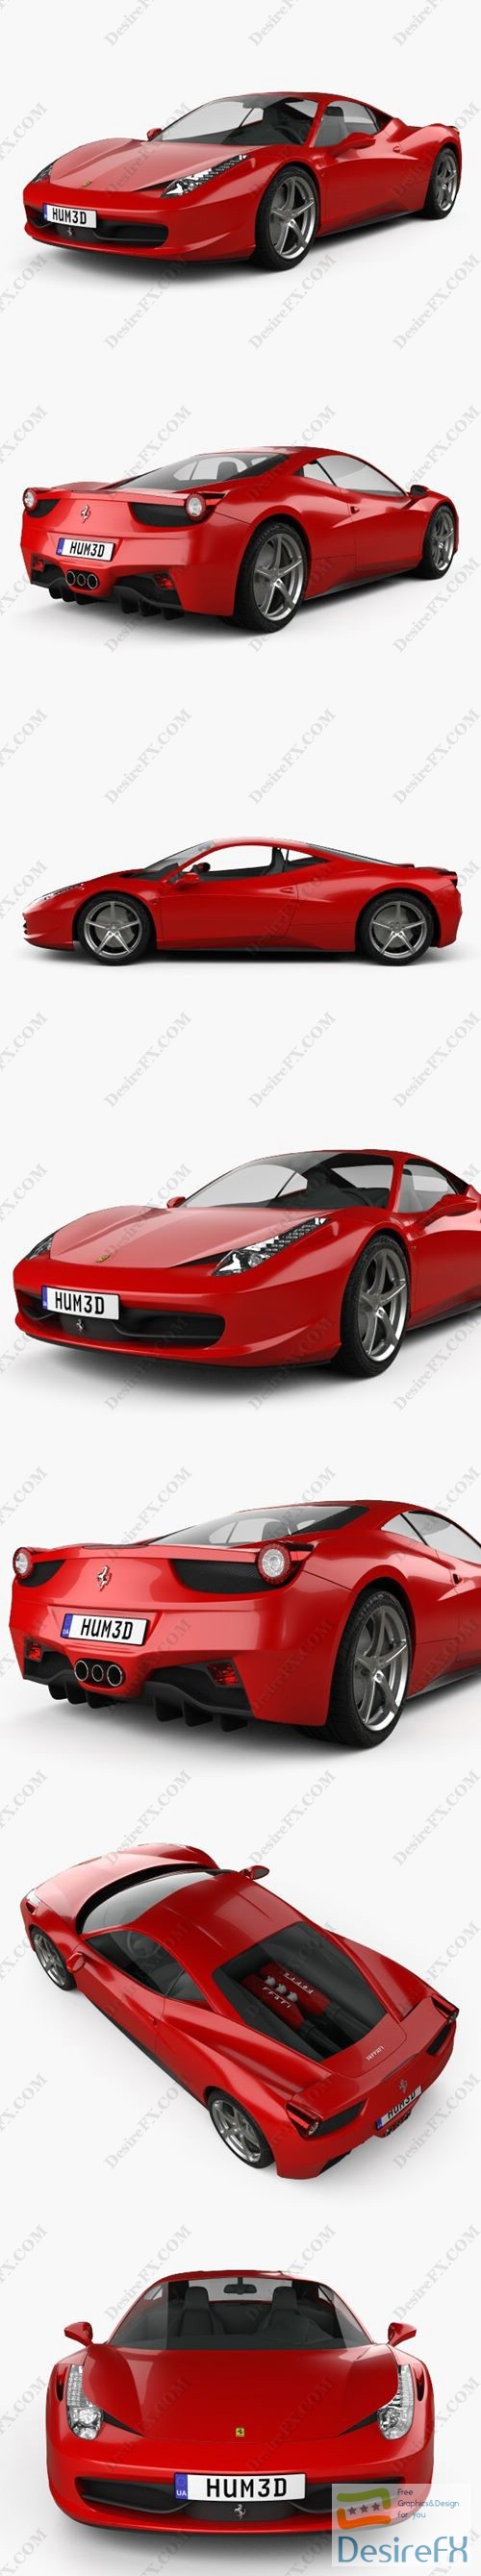 Ferrari 458 Italia 2011 3D Model